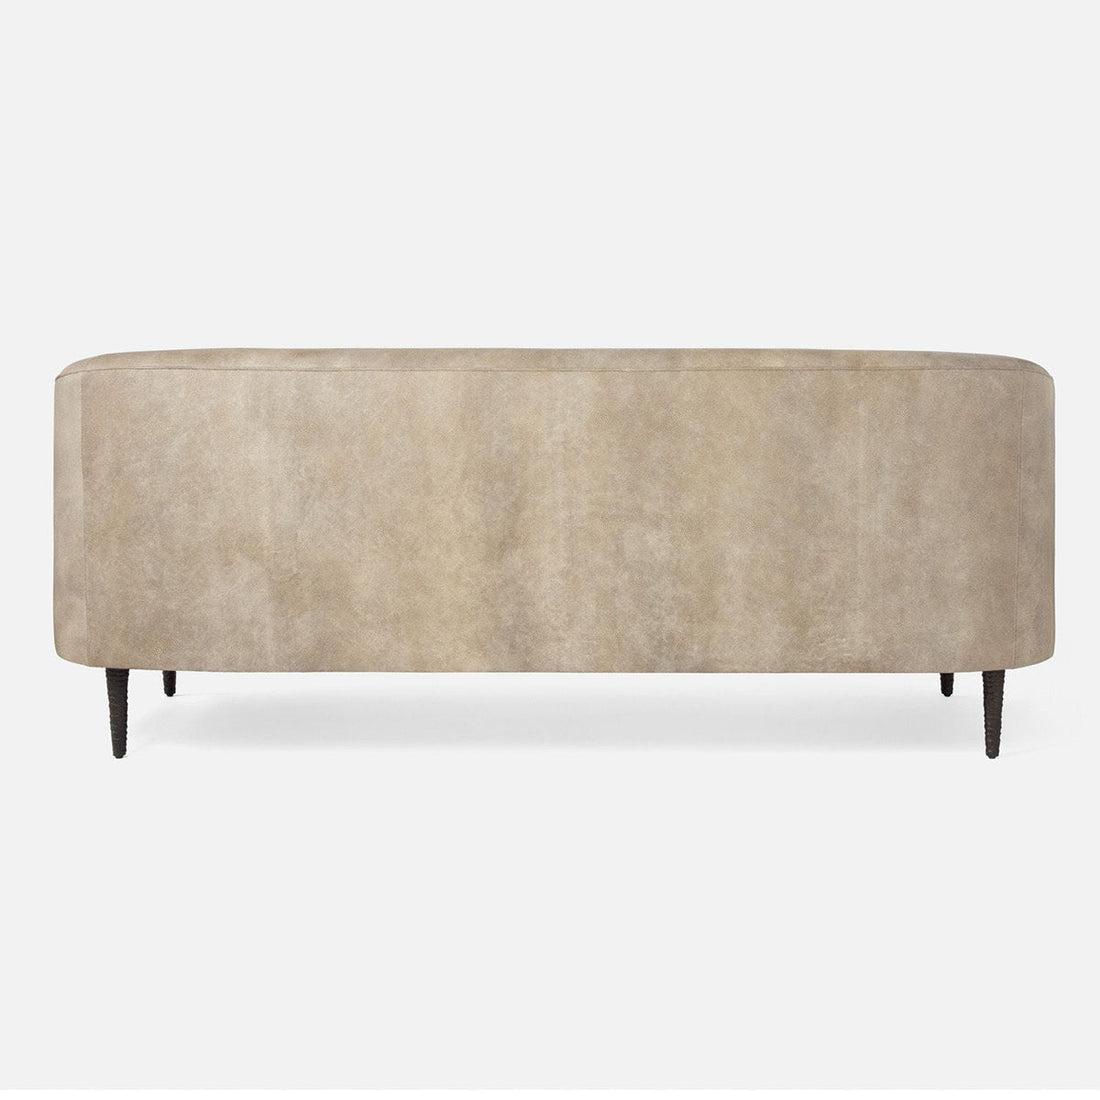 Made Goods Basset Contemporary Cabriole-Style Sofa, Nile Fabric